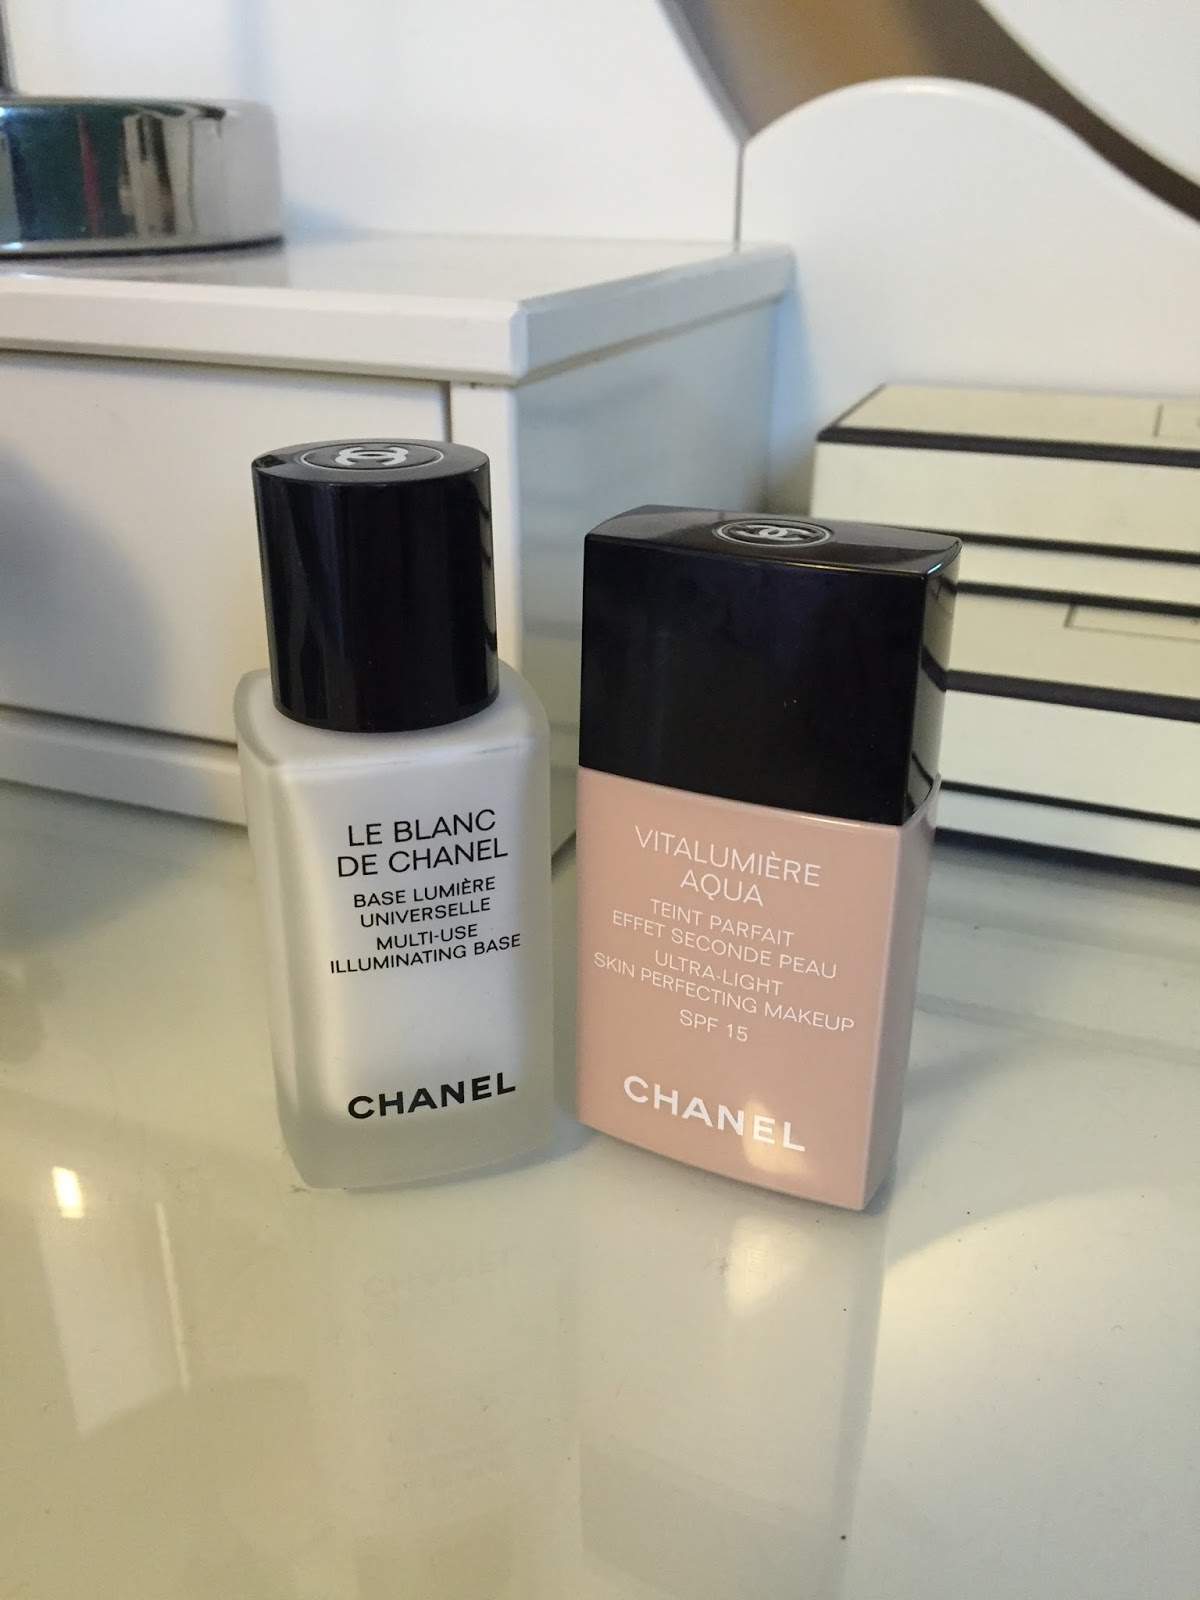 CHANEL Le Blanc de Chanel Sheer Illuminating Base - Reviews